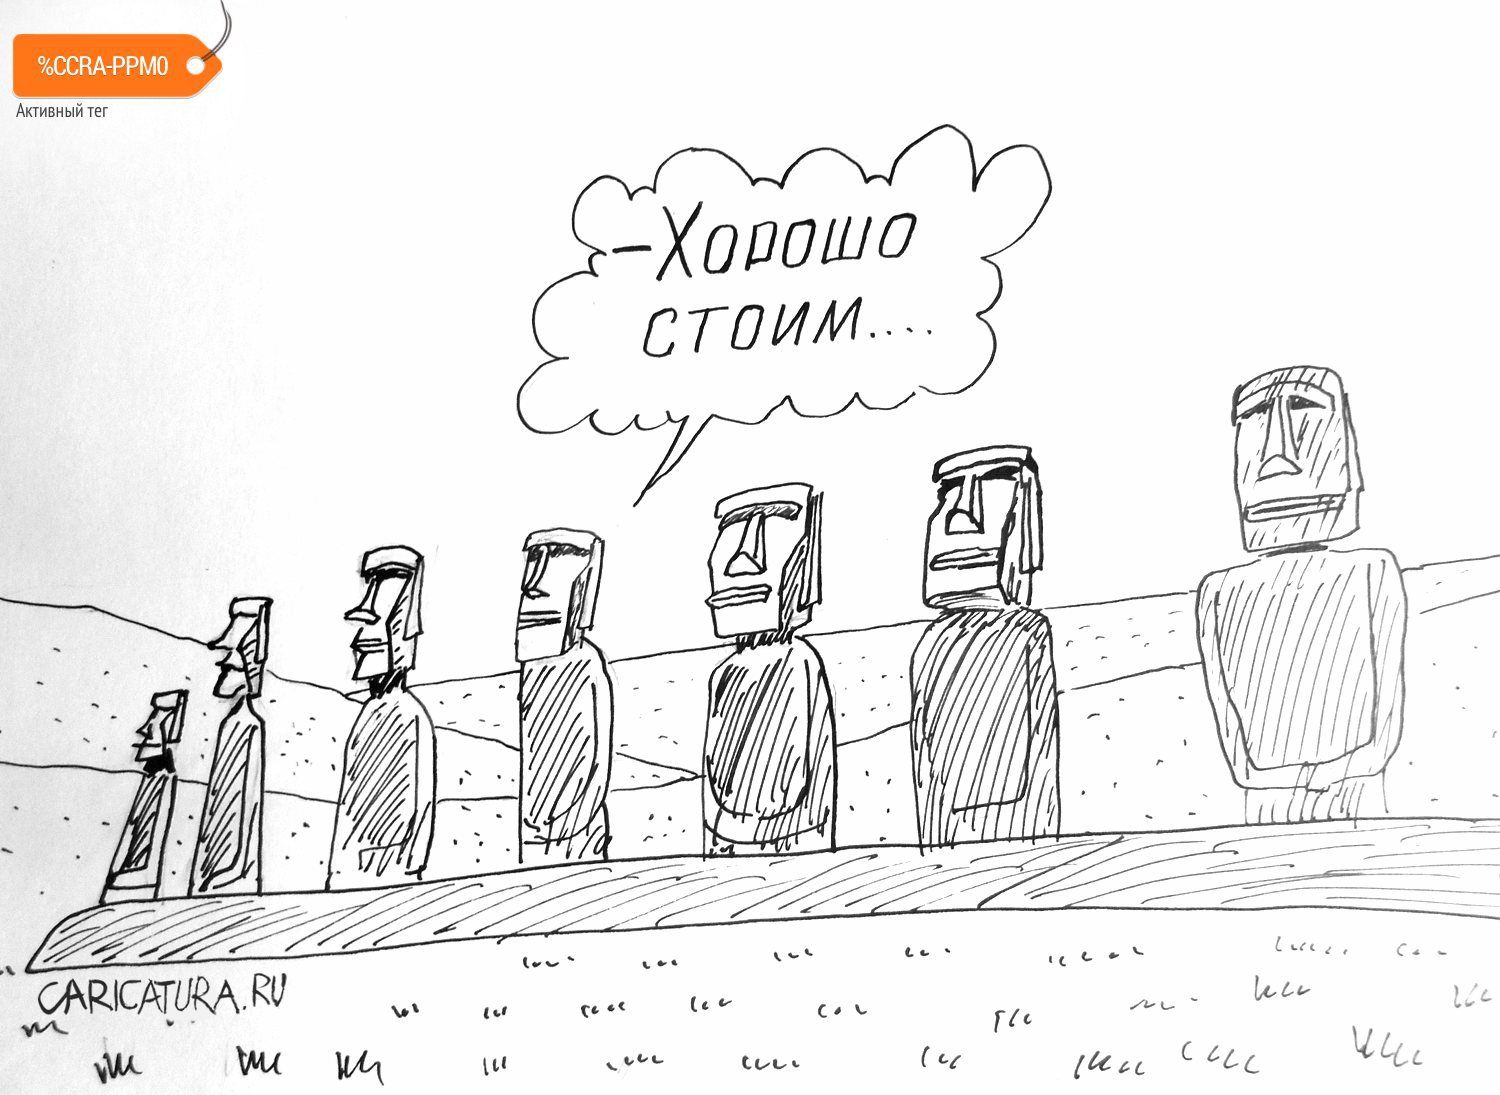 Карикатура "Идолы острова Пасхи", Александр Петров